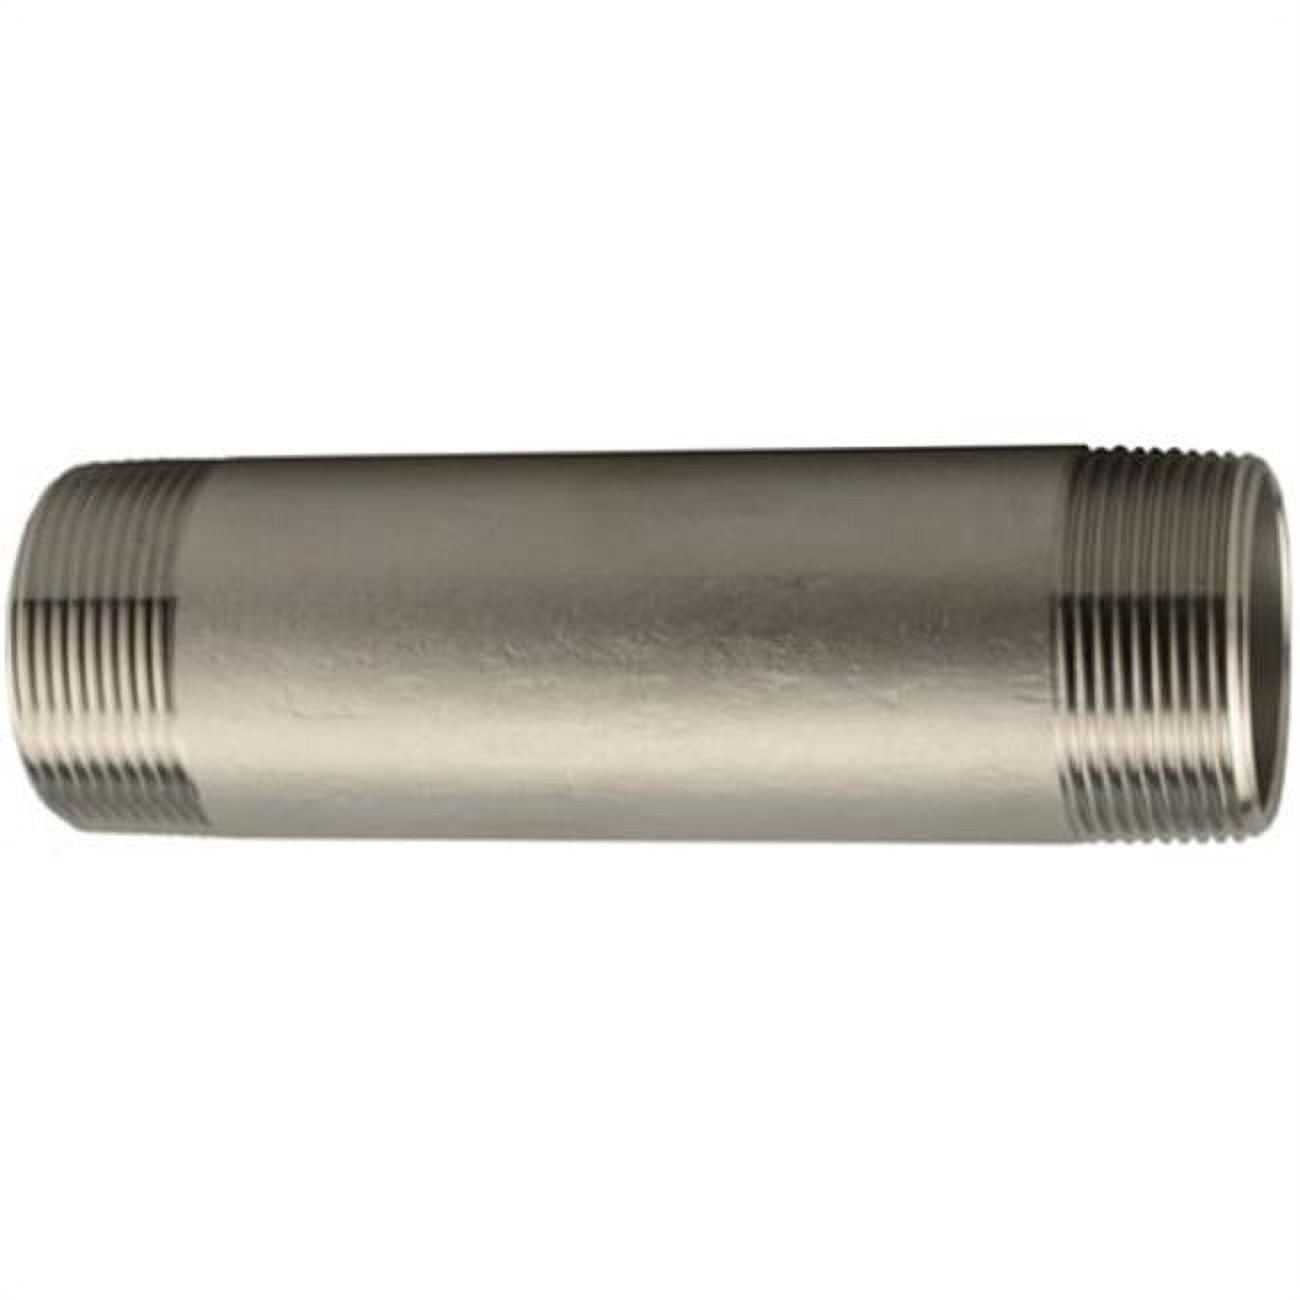 U2-ssn-0760 0.75 X 6 In. 304 Stainless Steel Nipple